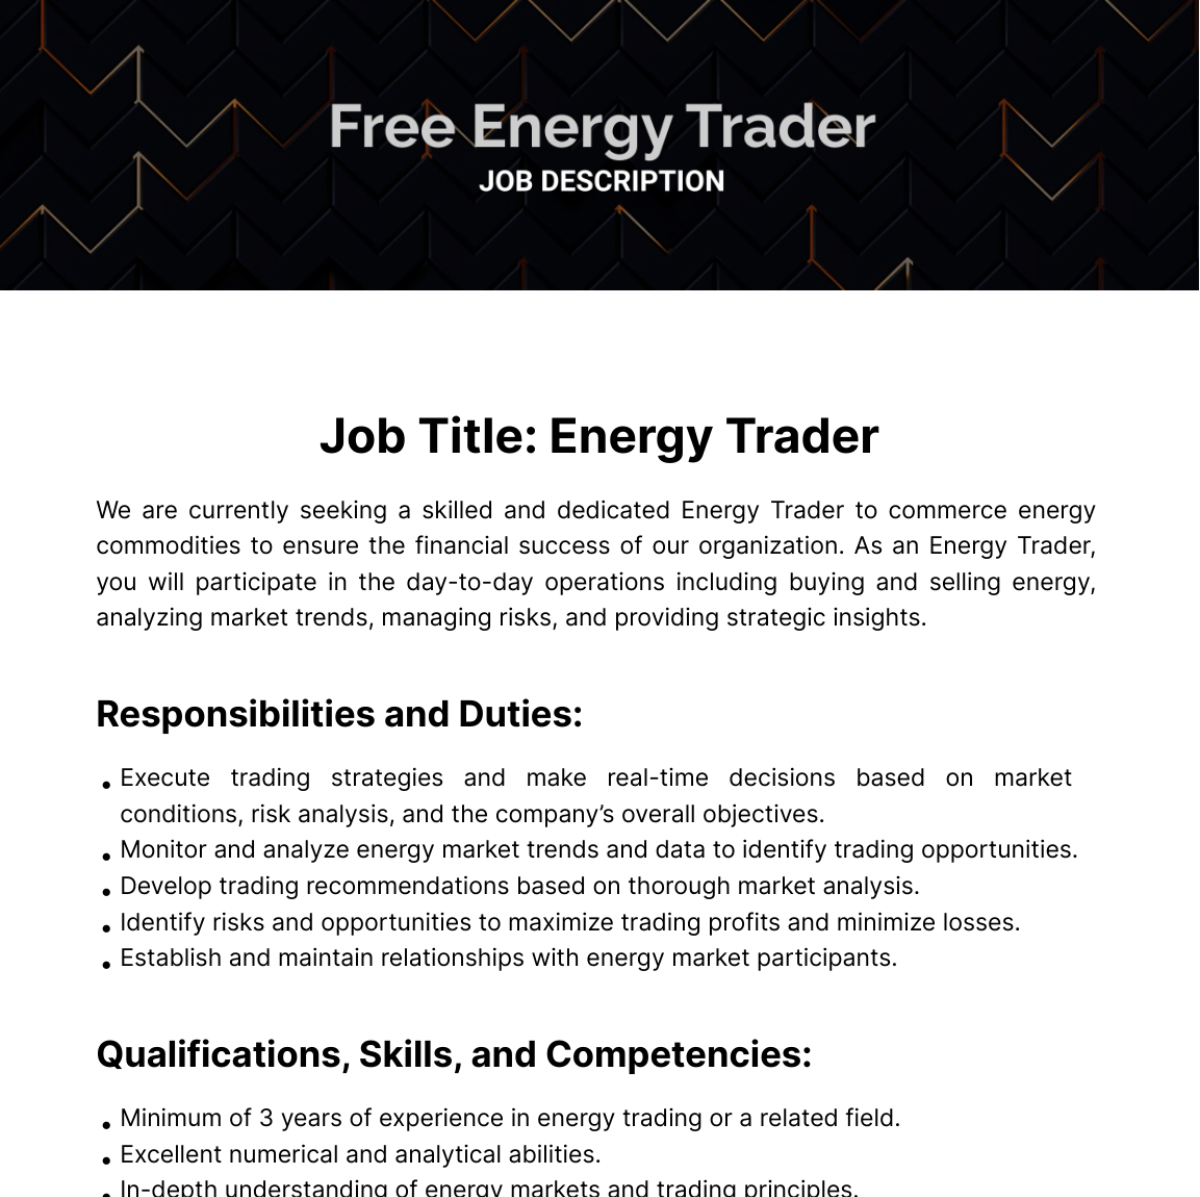 Free Energy Trader Job Description Template